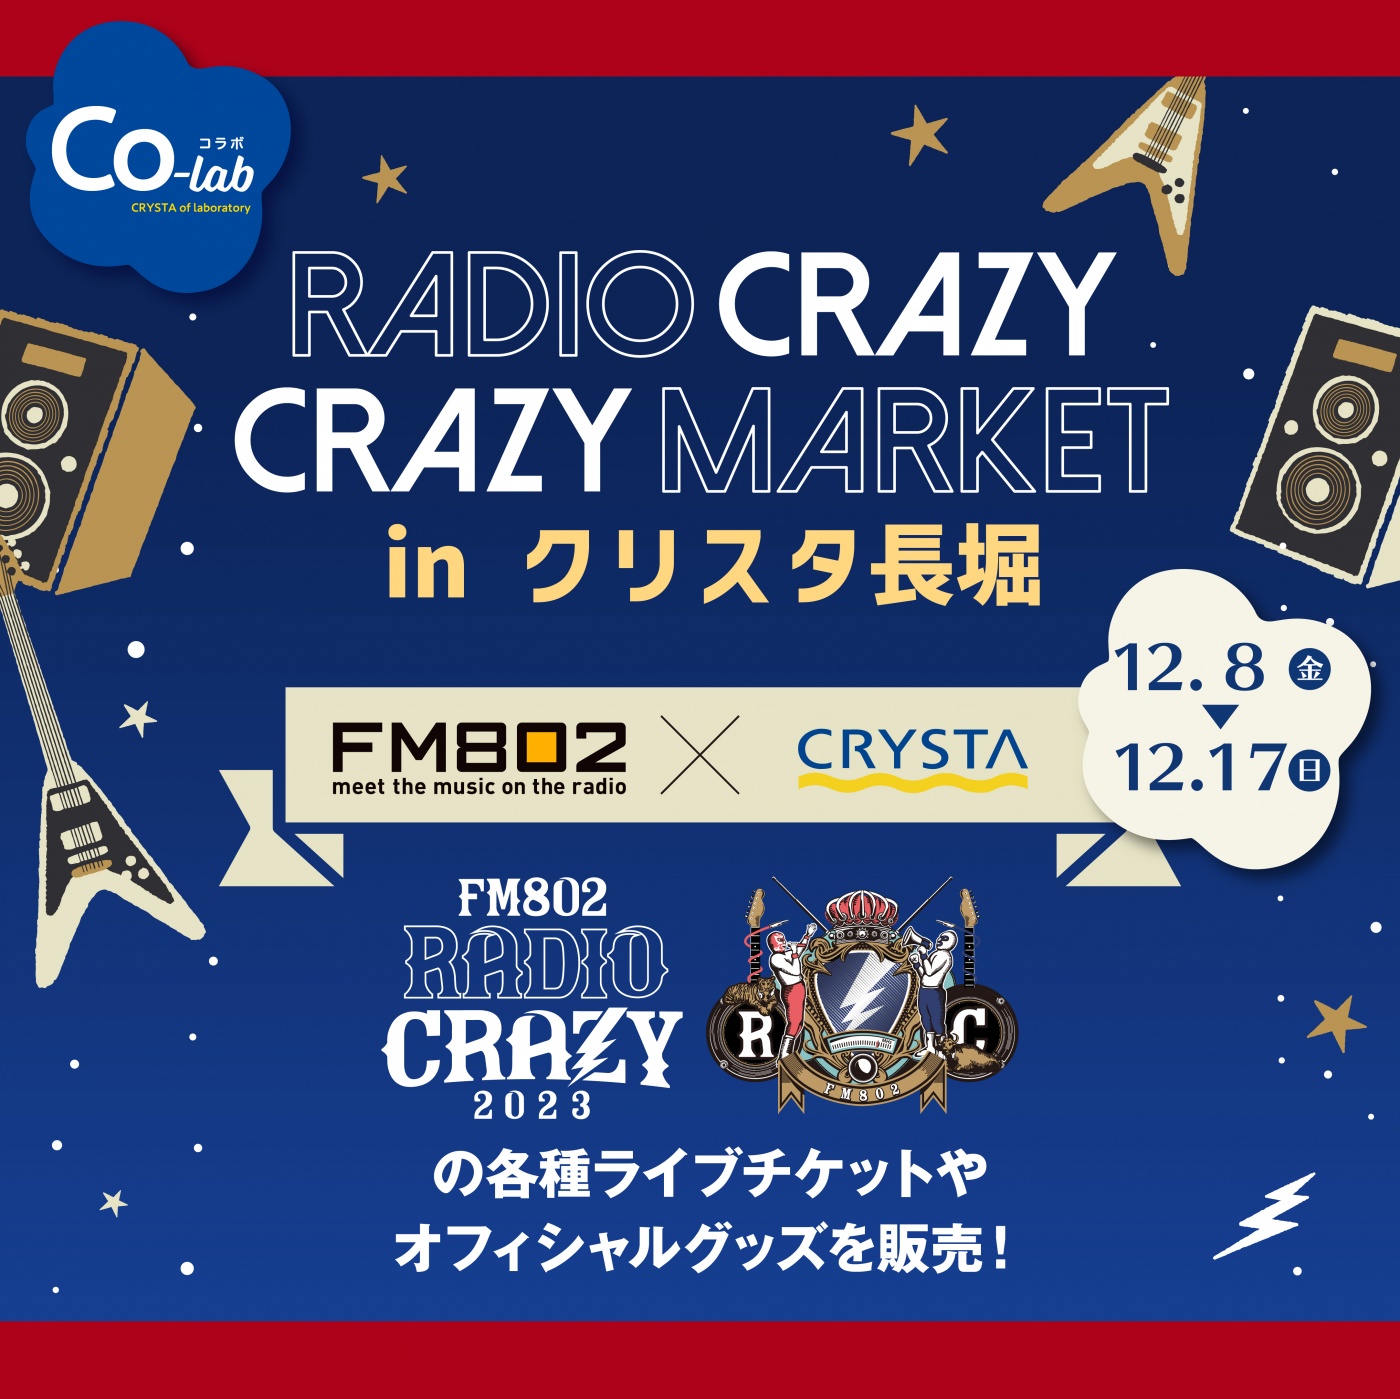 FM802 RADIO CRAZY「CRAZY MARKET」inクリスタ長堀